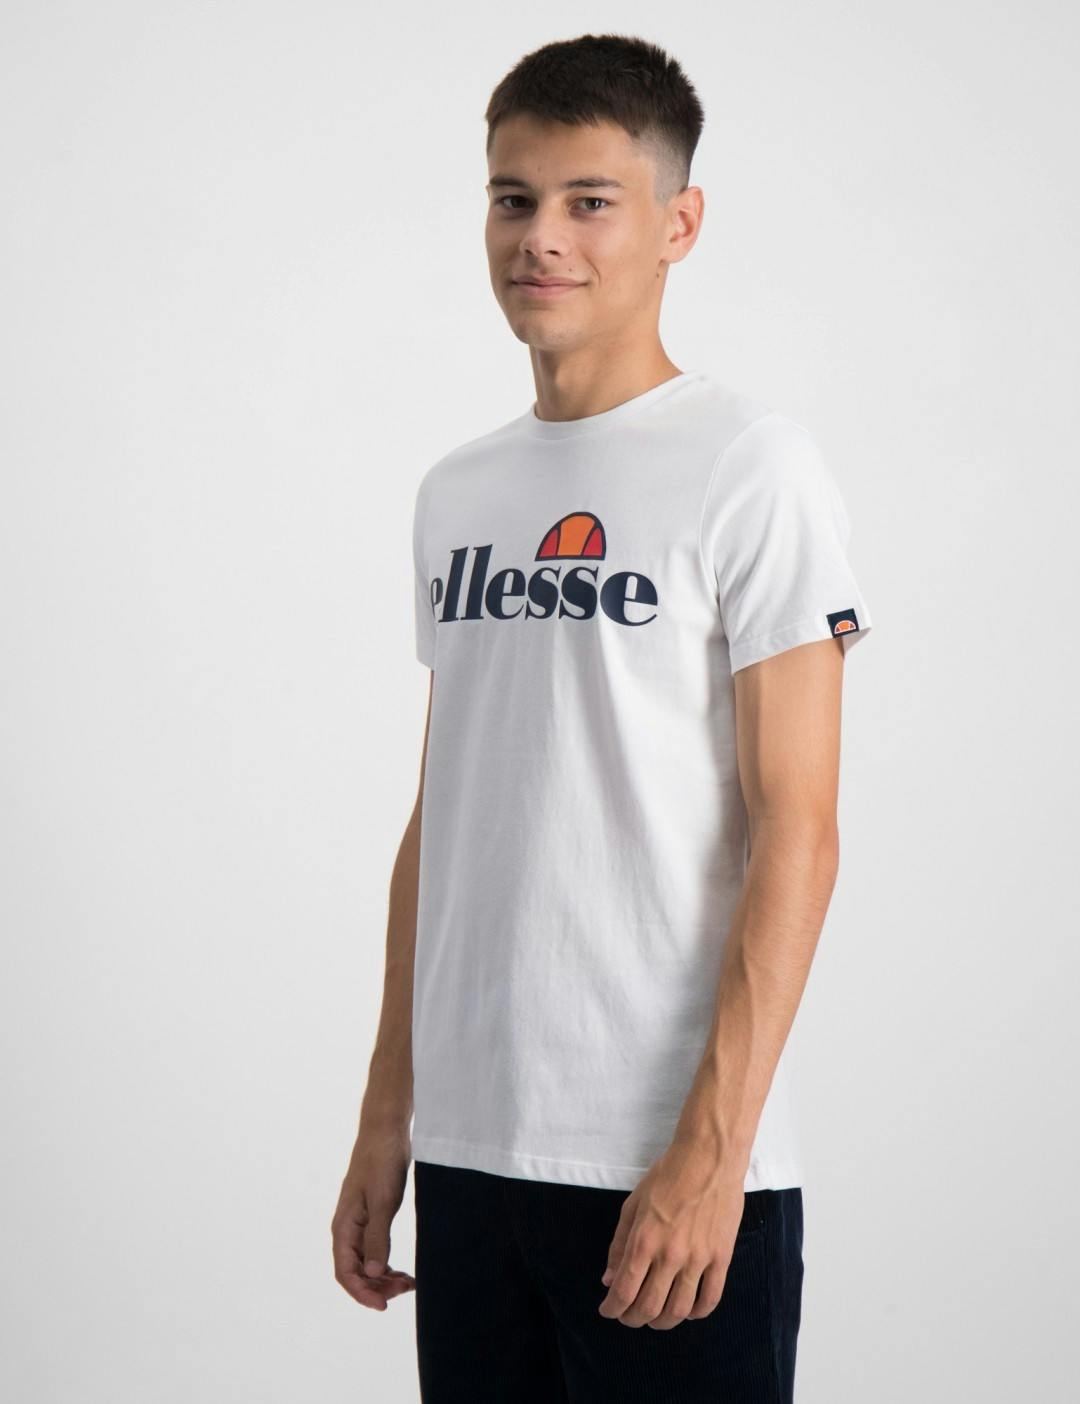 Ellesse T-shirts för barn & ungdom | Kids Brand Store